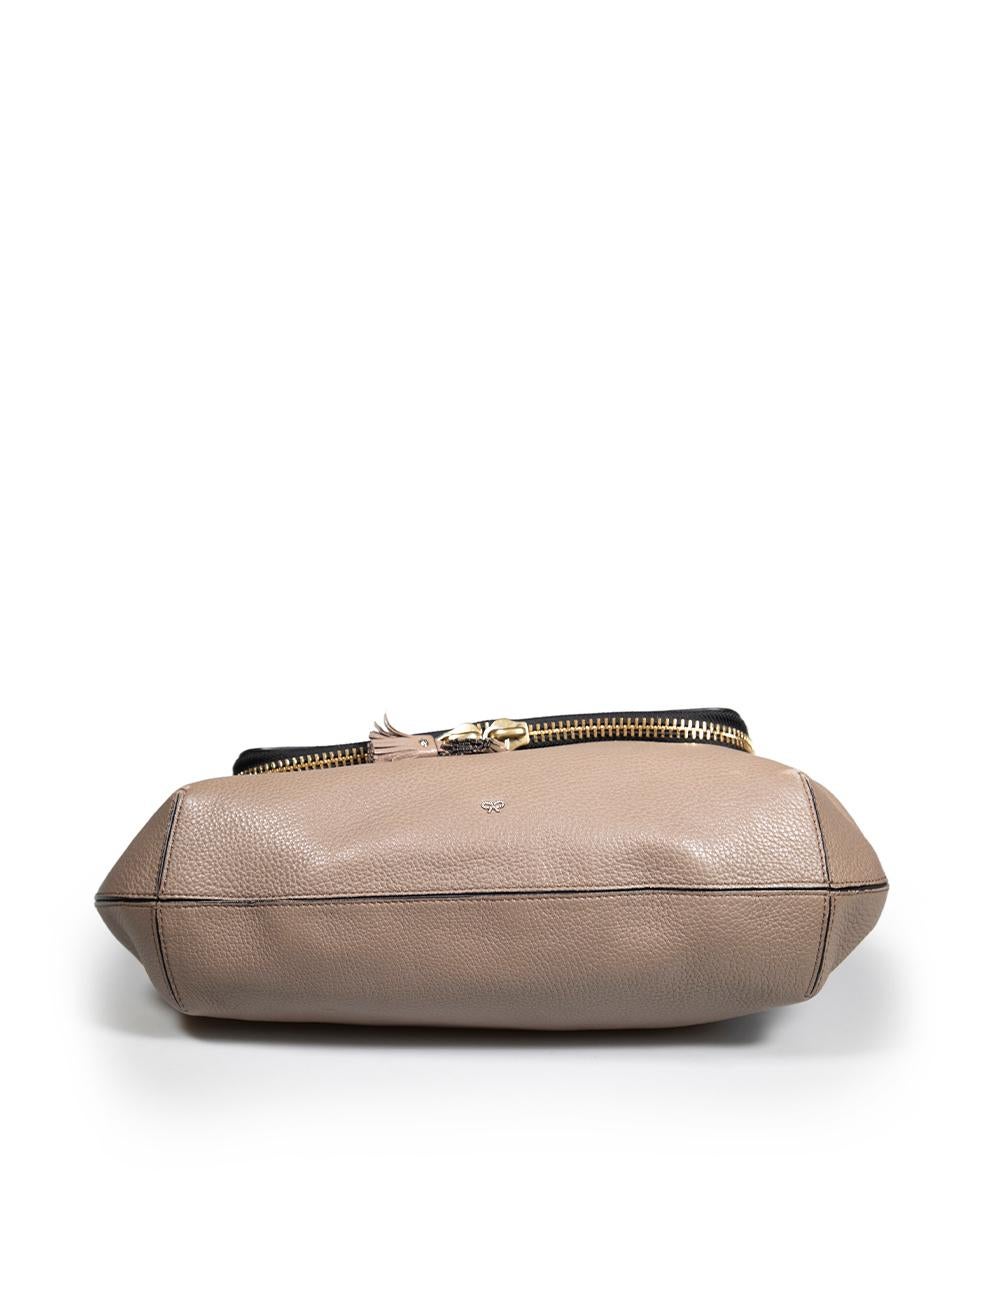 Women's Anya Hindmarch Brown Leather Maxi Zip Crossbody Bag